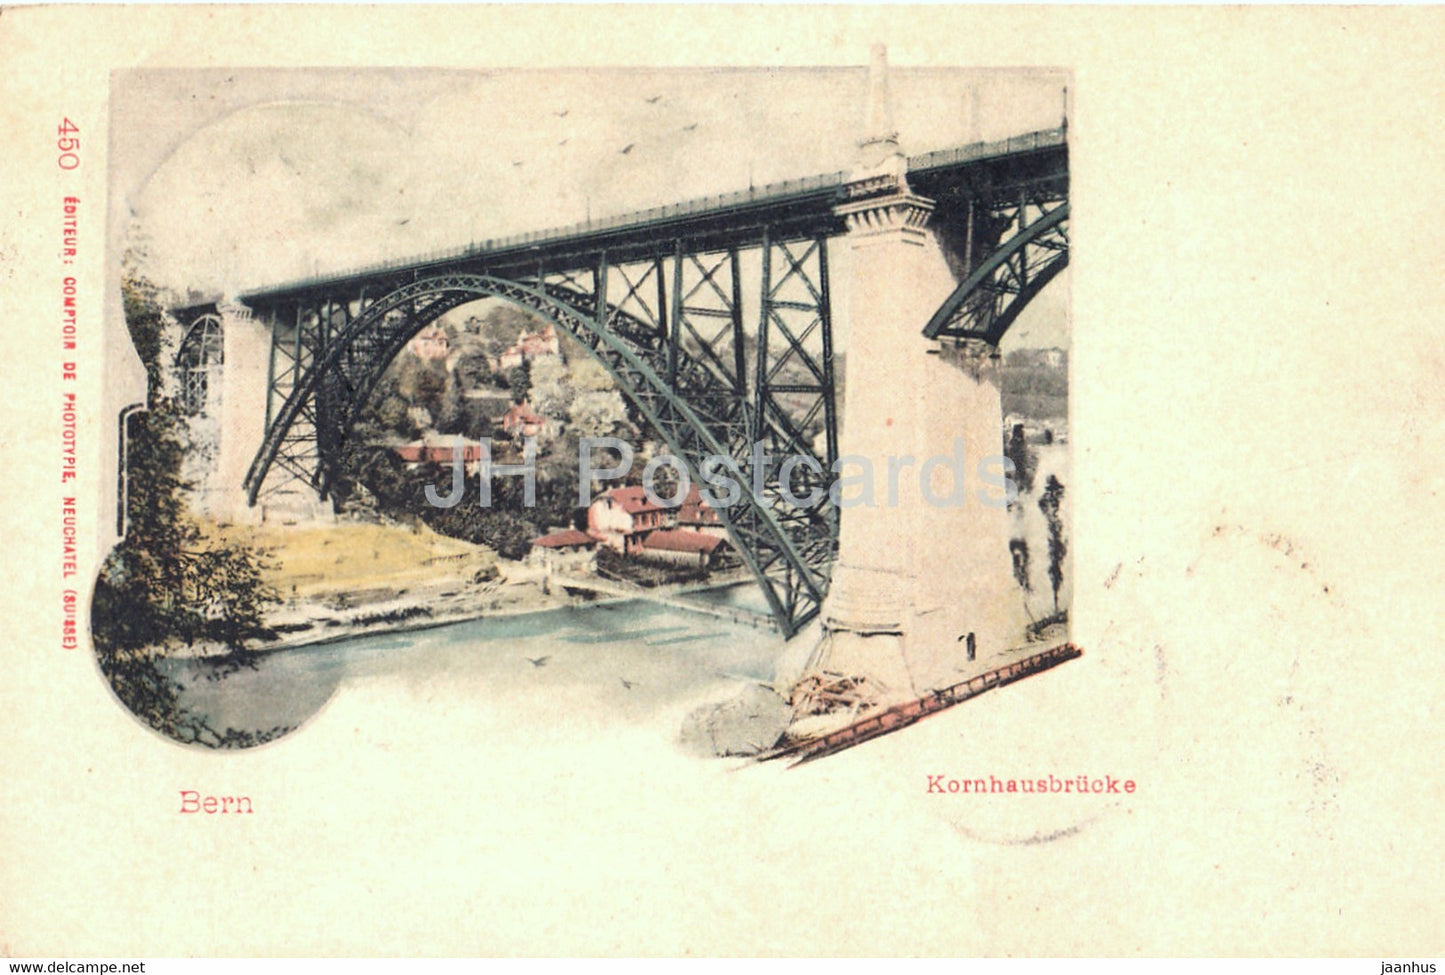 Bern - Berne - Kornhausbrucke - bridge - 450 - old postcard - 1902 - Switzerland - used - JH Postcards